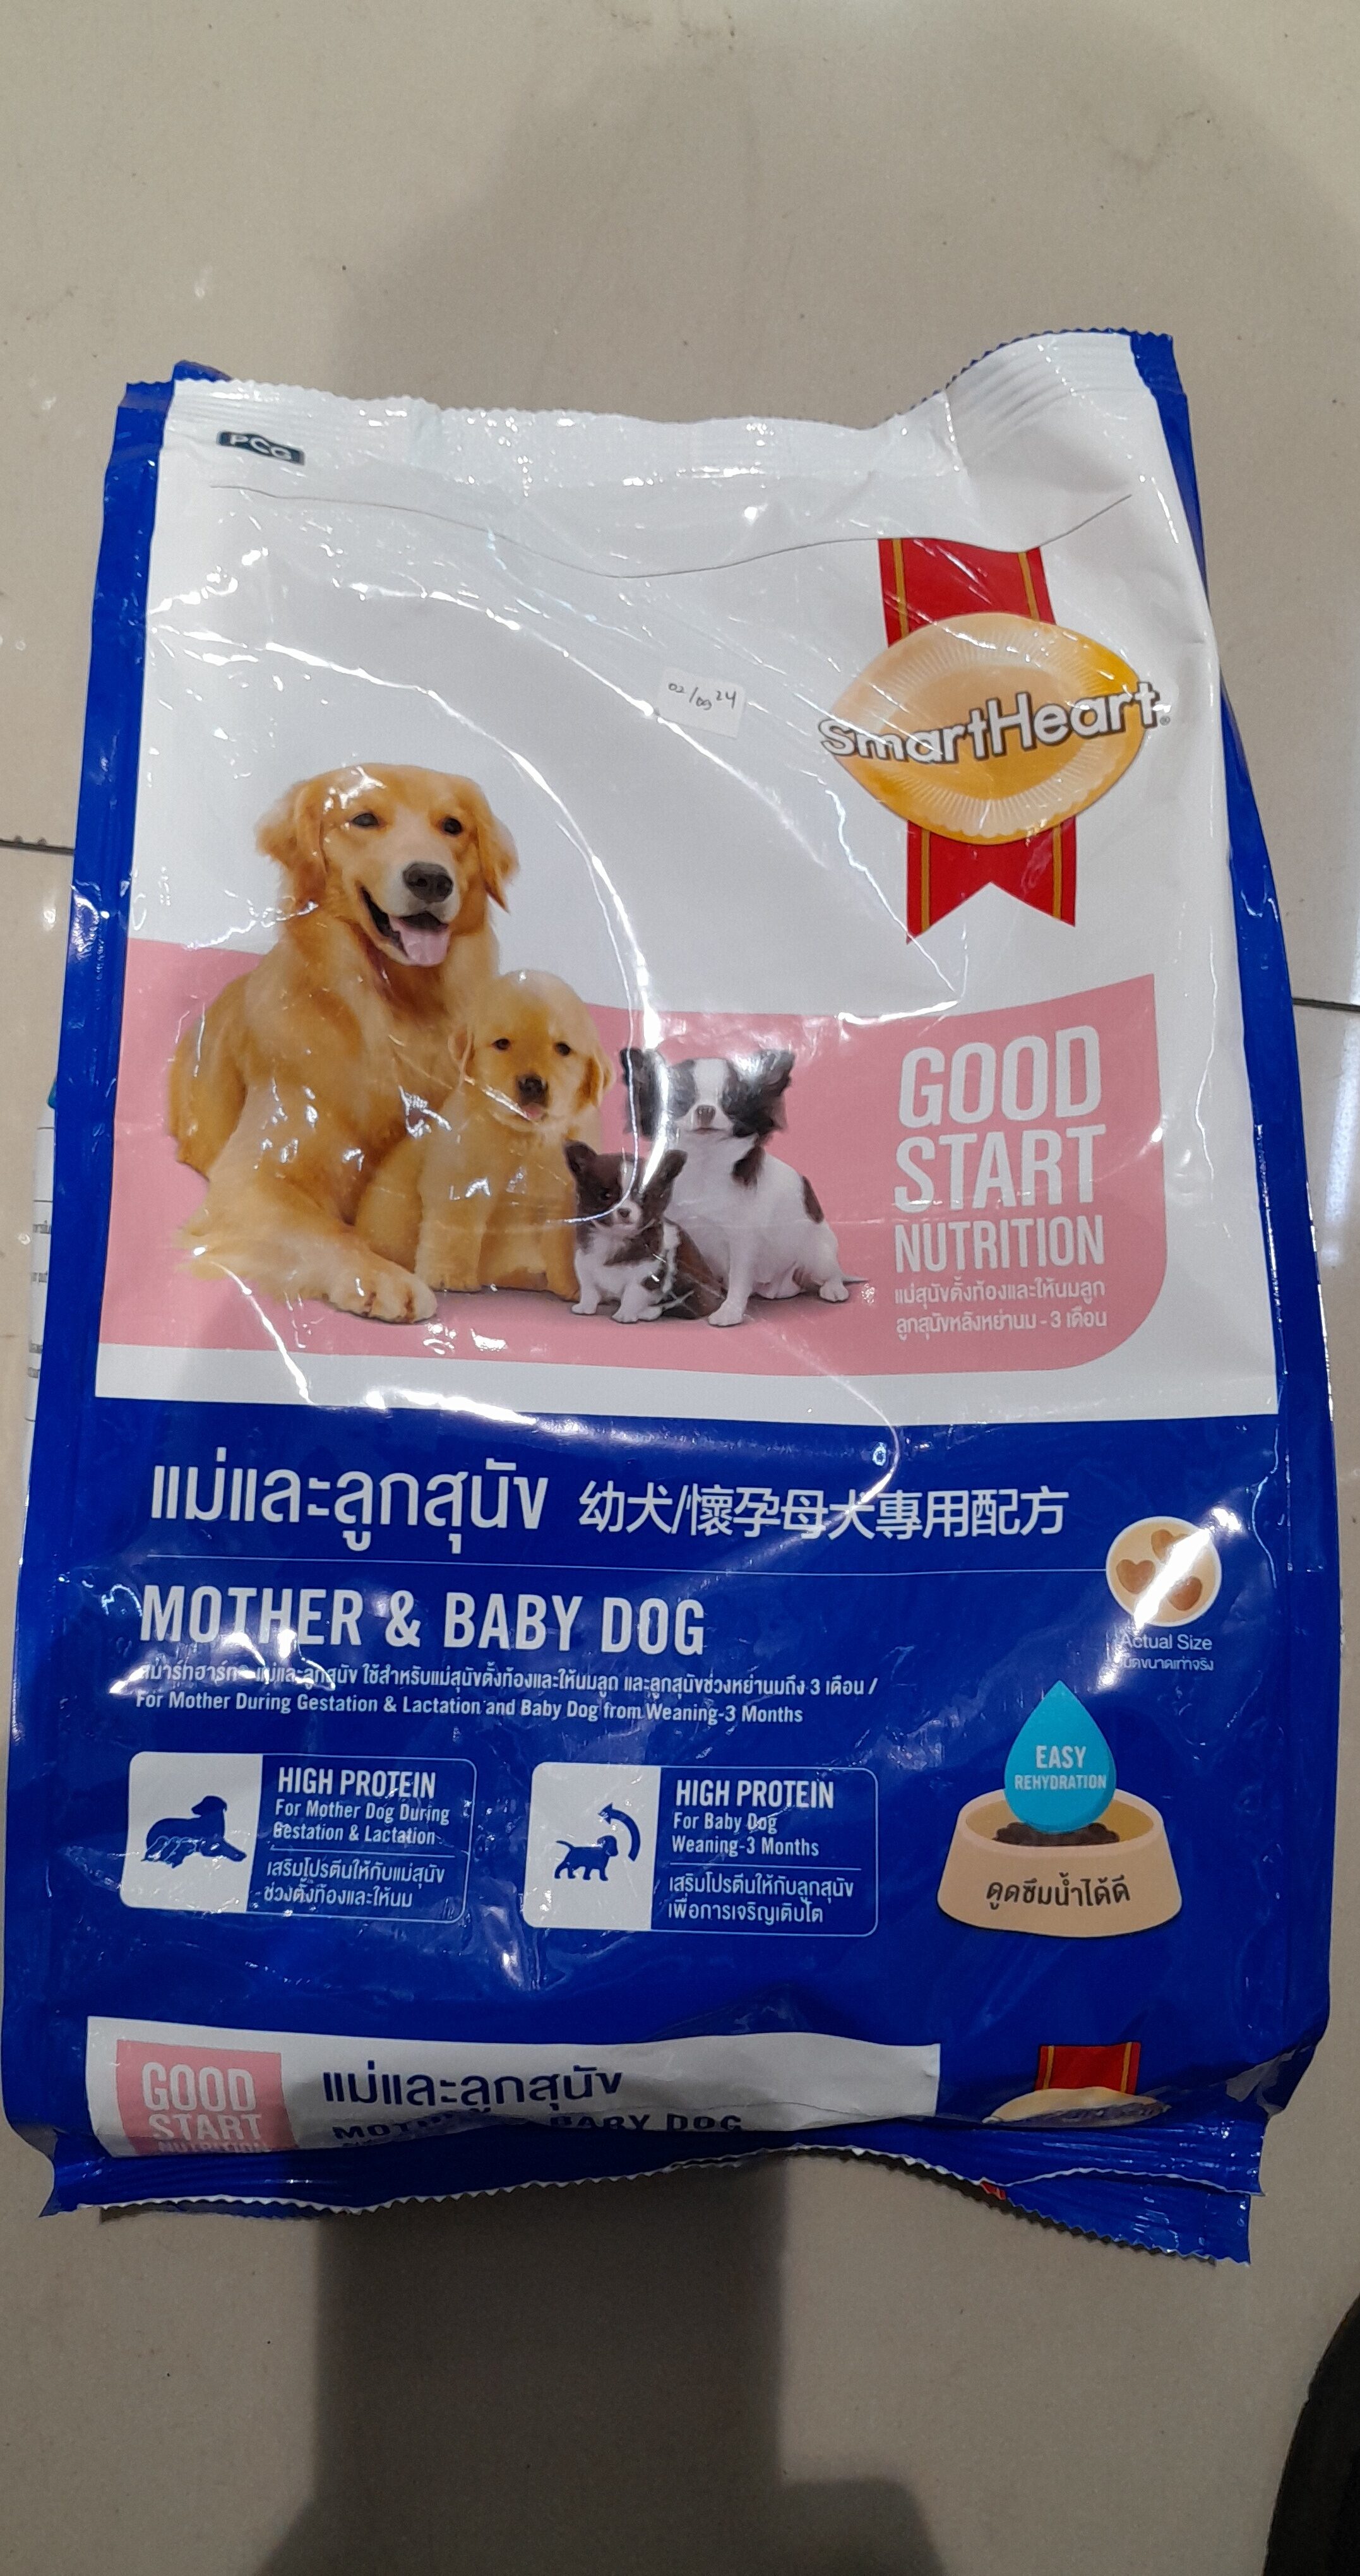 Dogfood smartheart mother &baby dog - Product - id